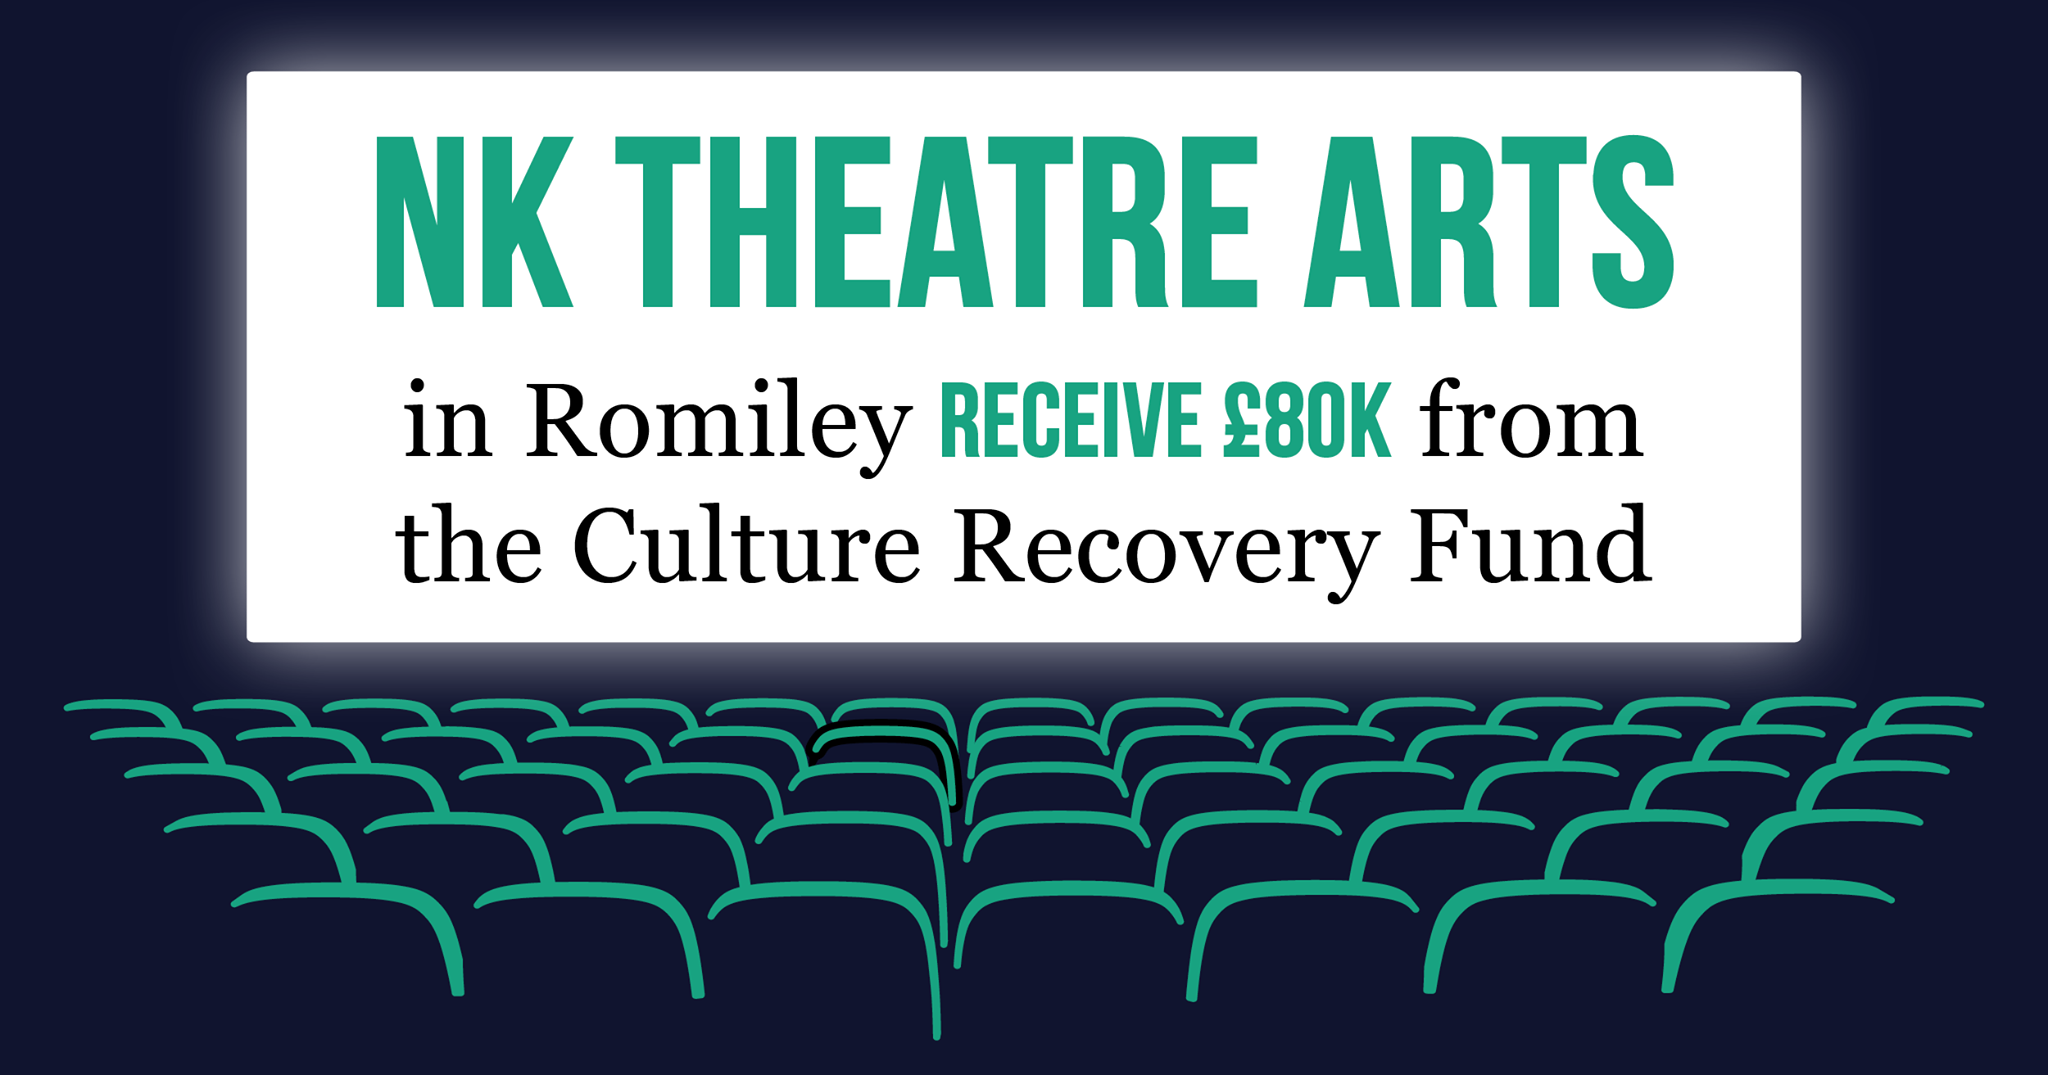 NK Theatre Arts Support